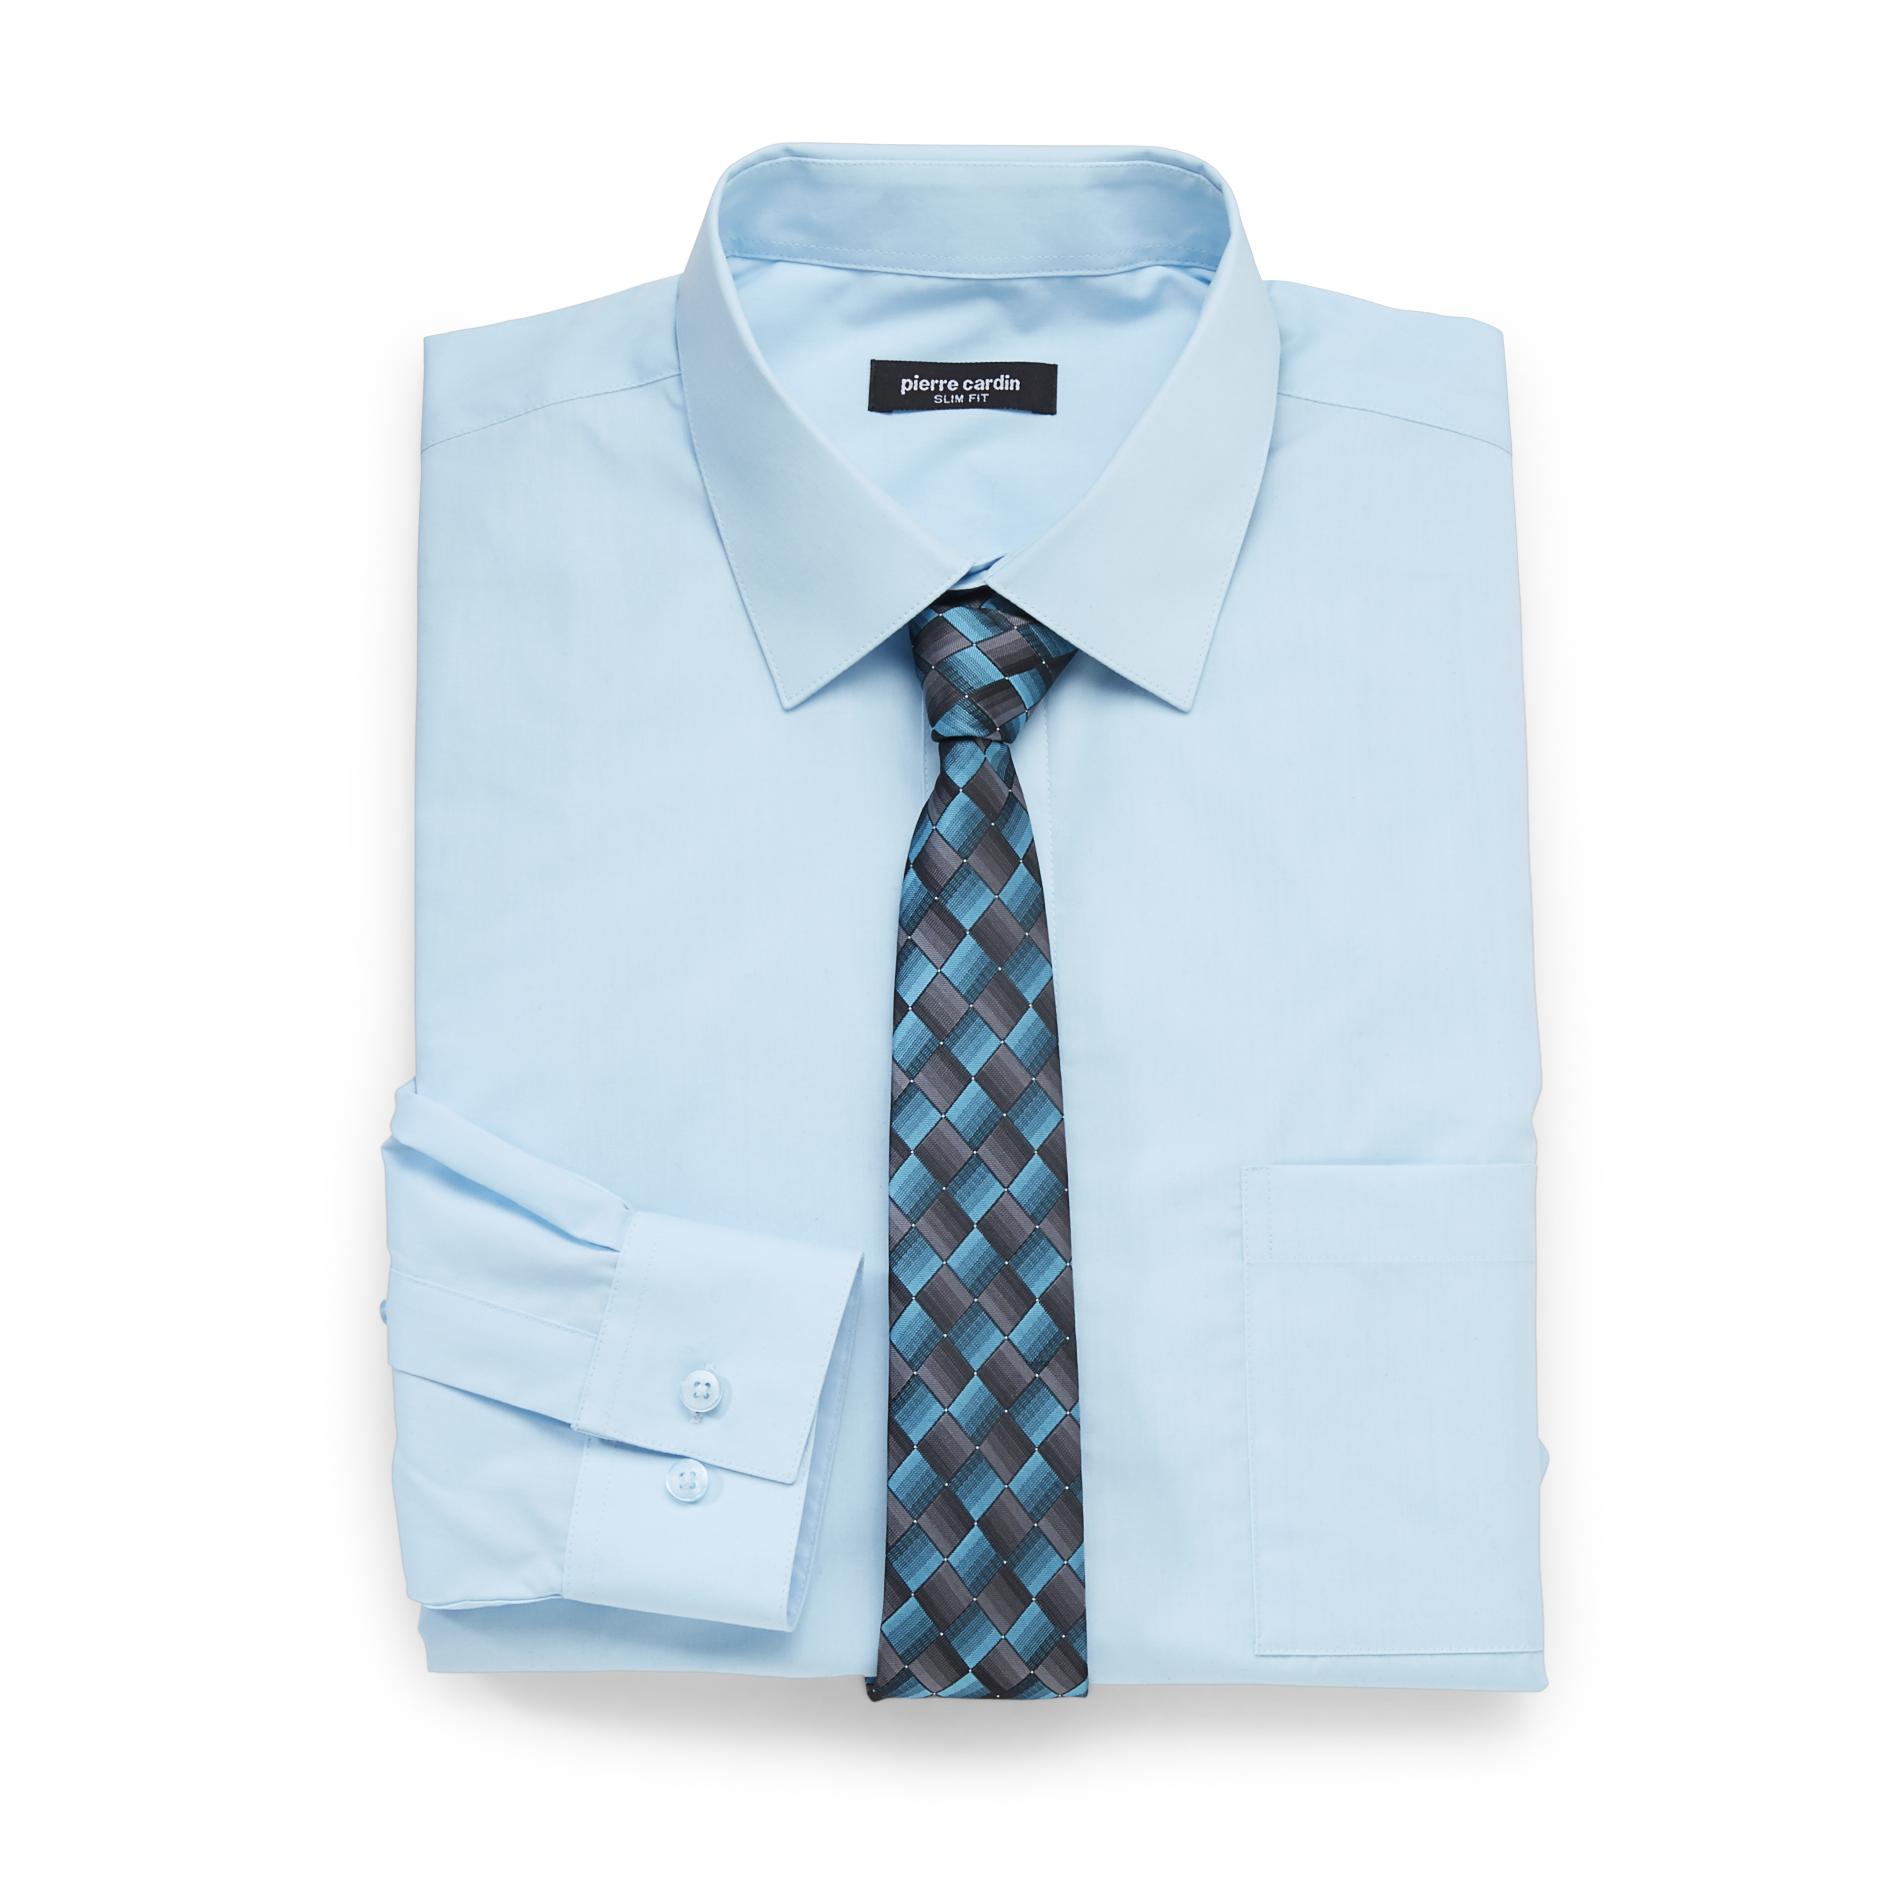 Pierre Cardin Men's Slim Fit Shirt & Tie - Diamond Print